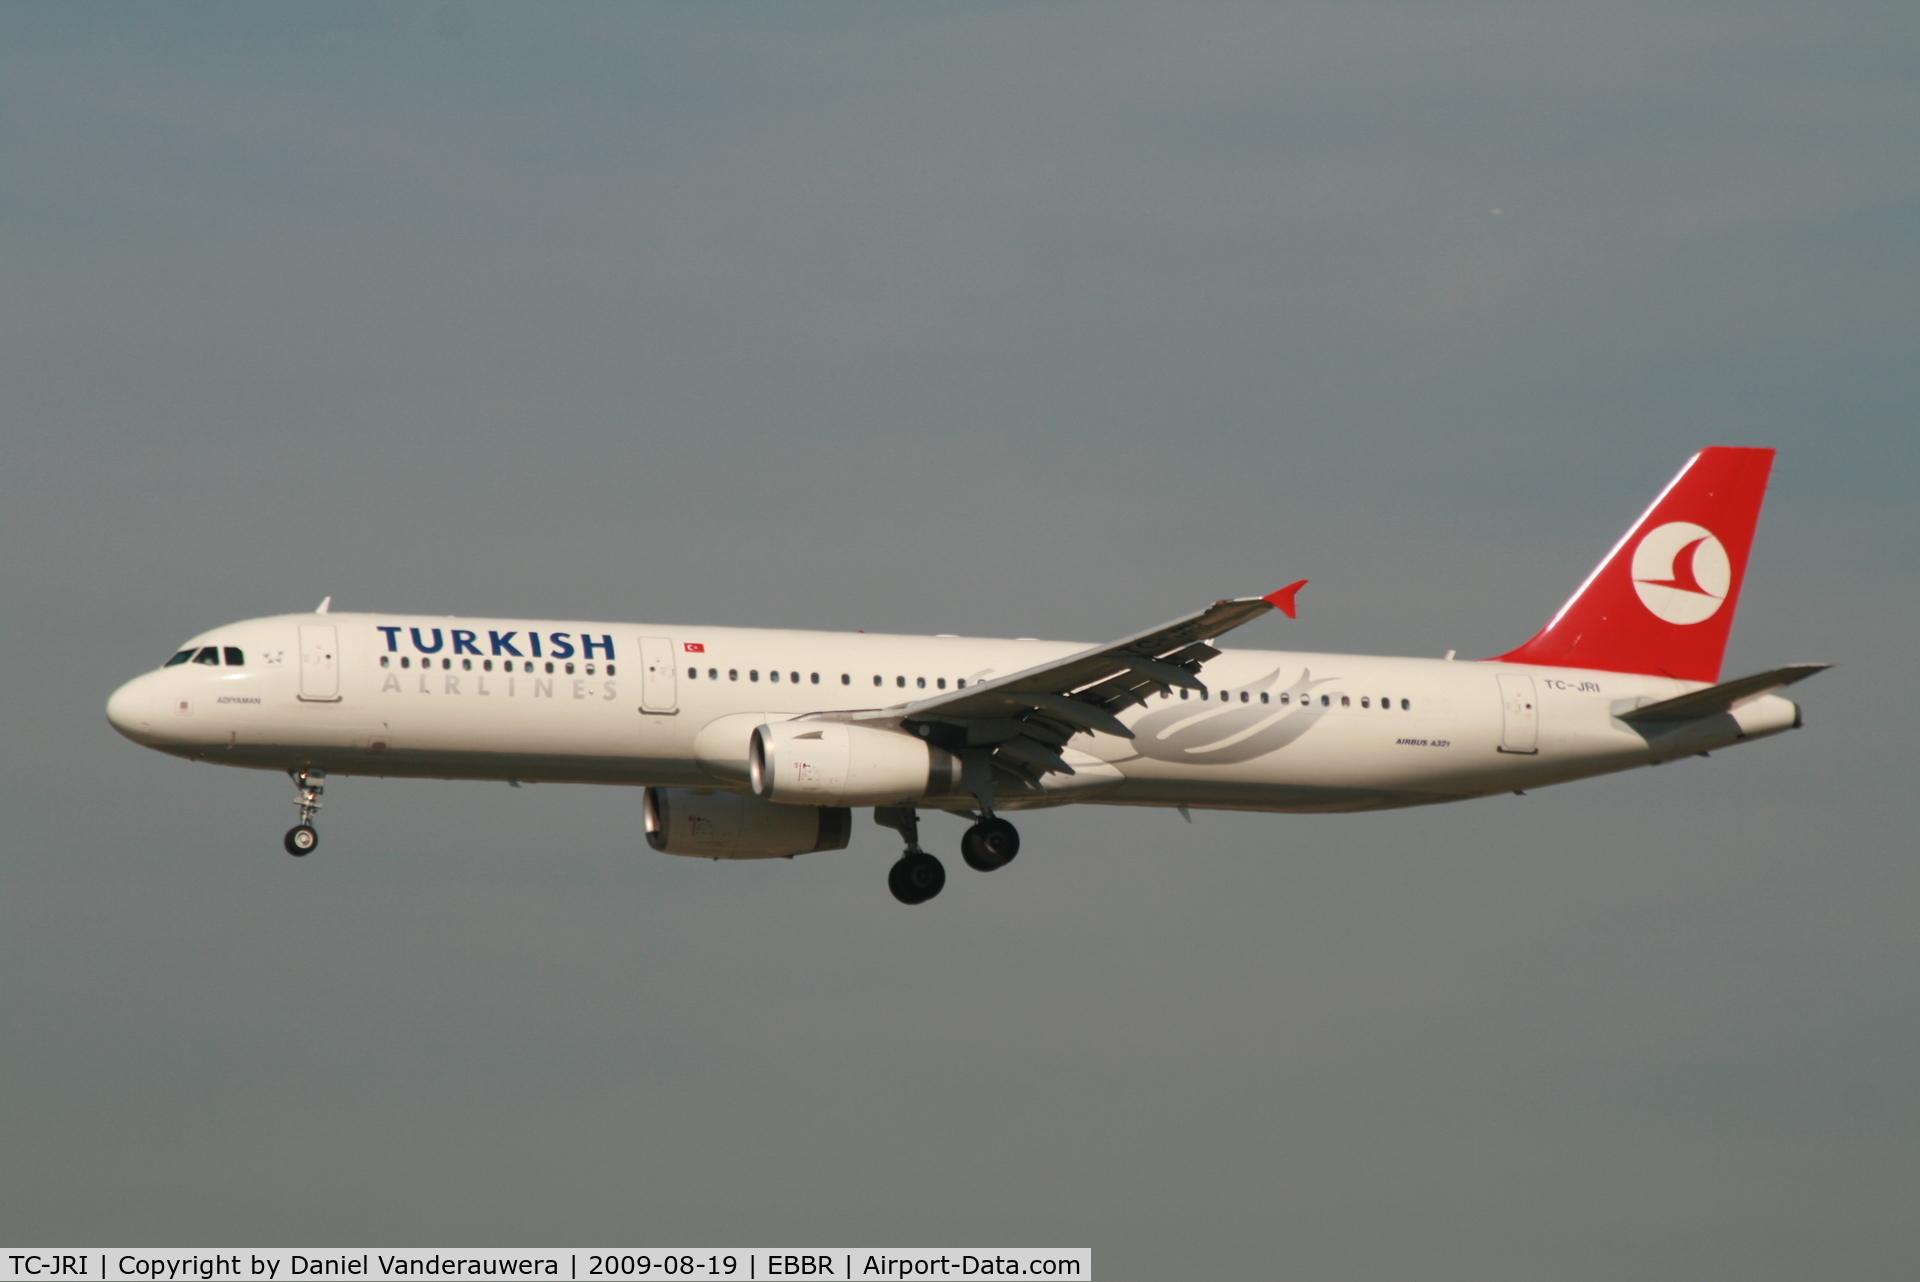 TC-JRI, 2008 Airbus A321-231 C/N 3405, flight TK1937 is descending to rwy 20